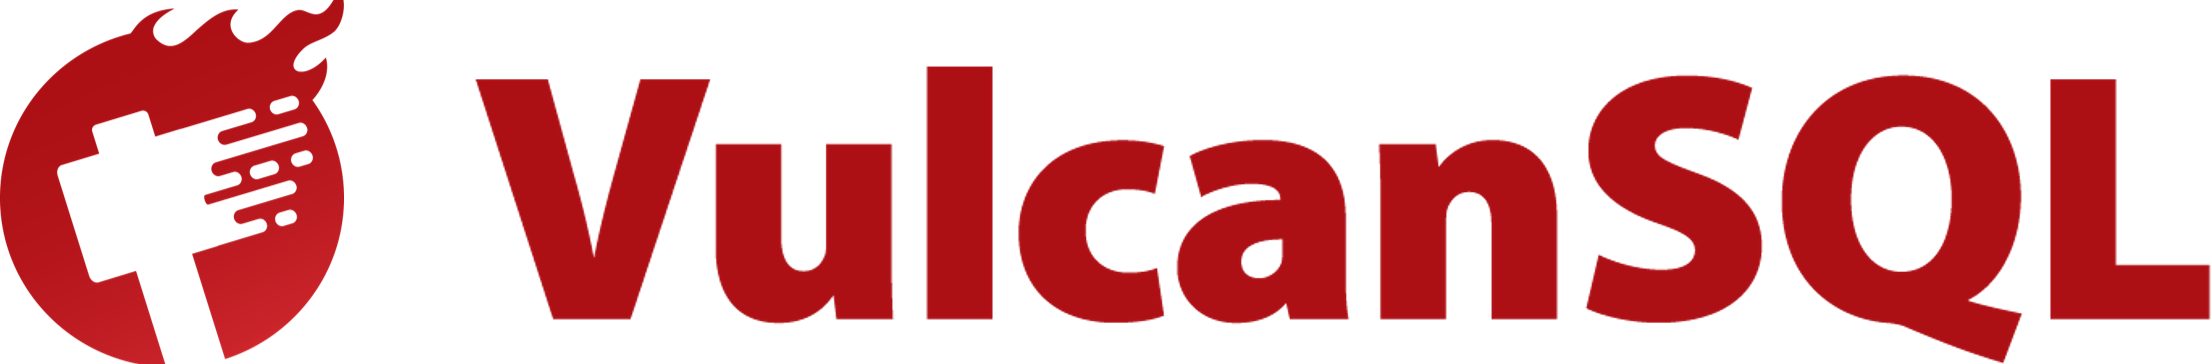 VulcanSQL Logo